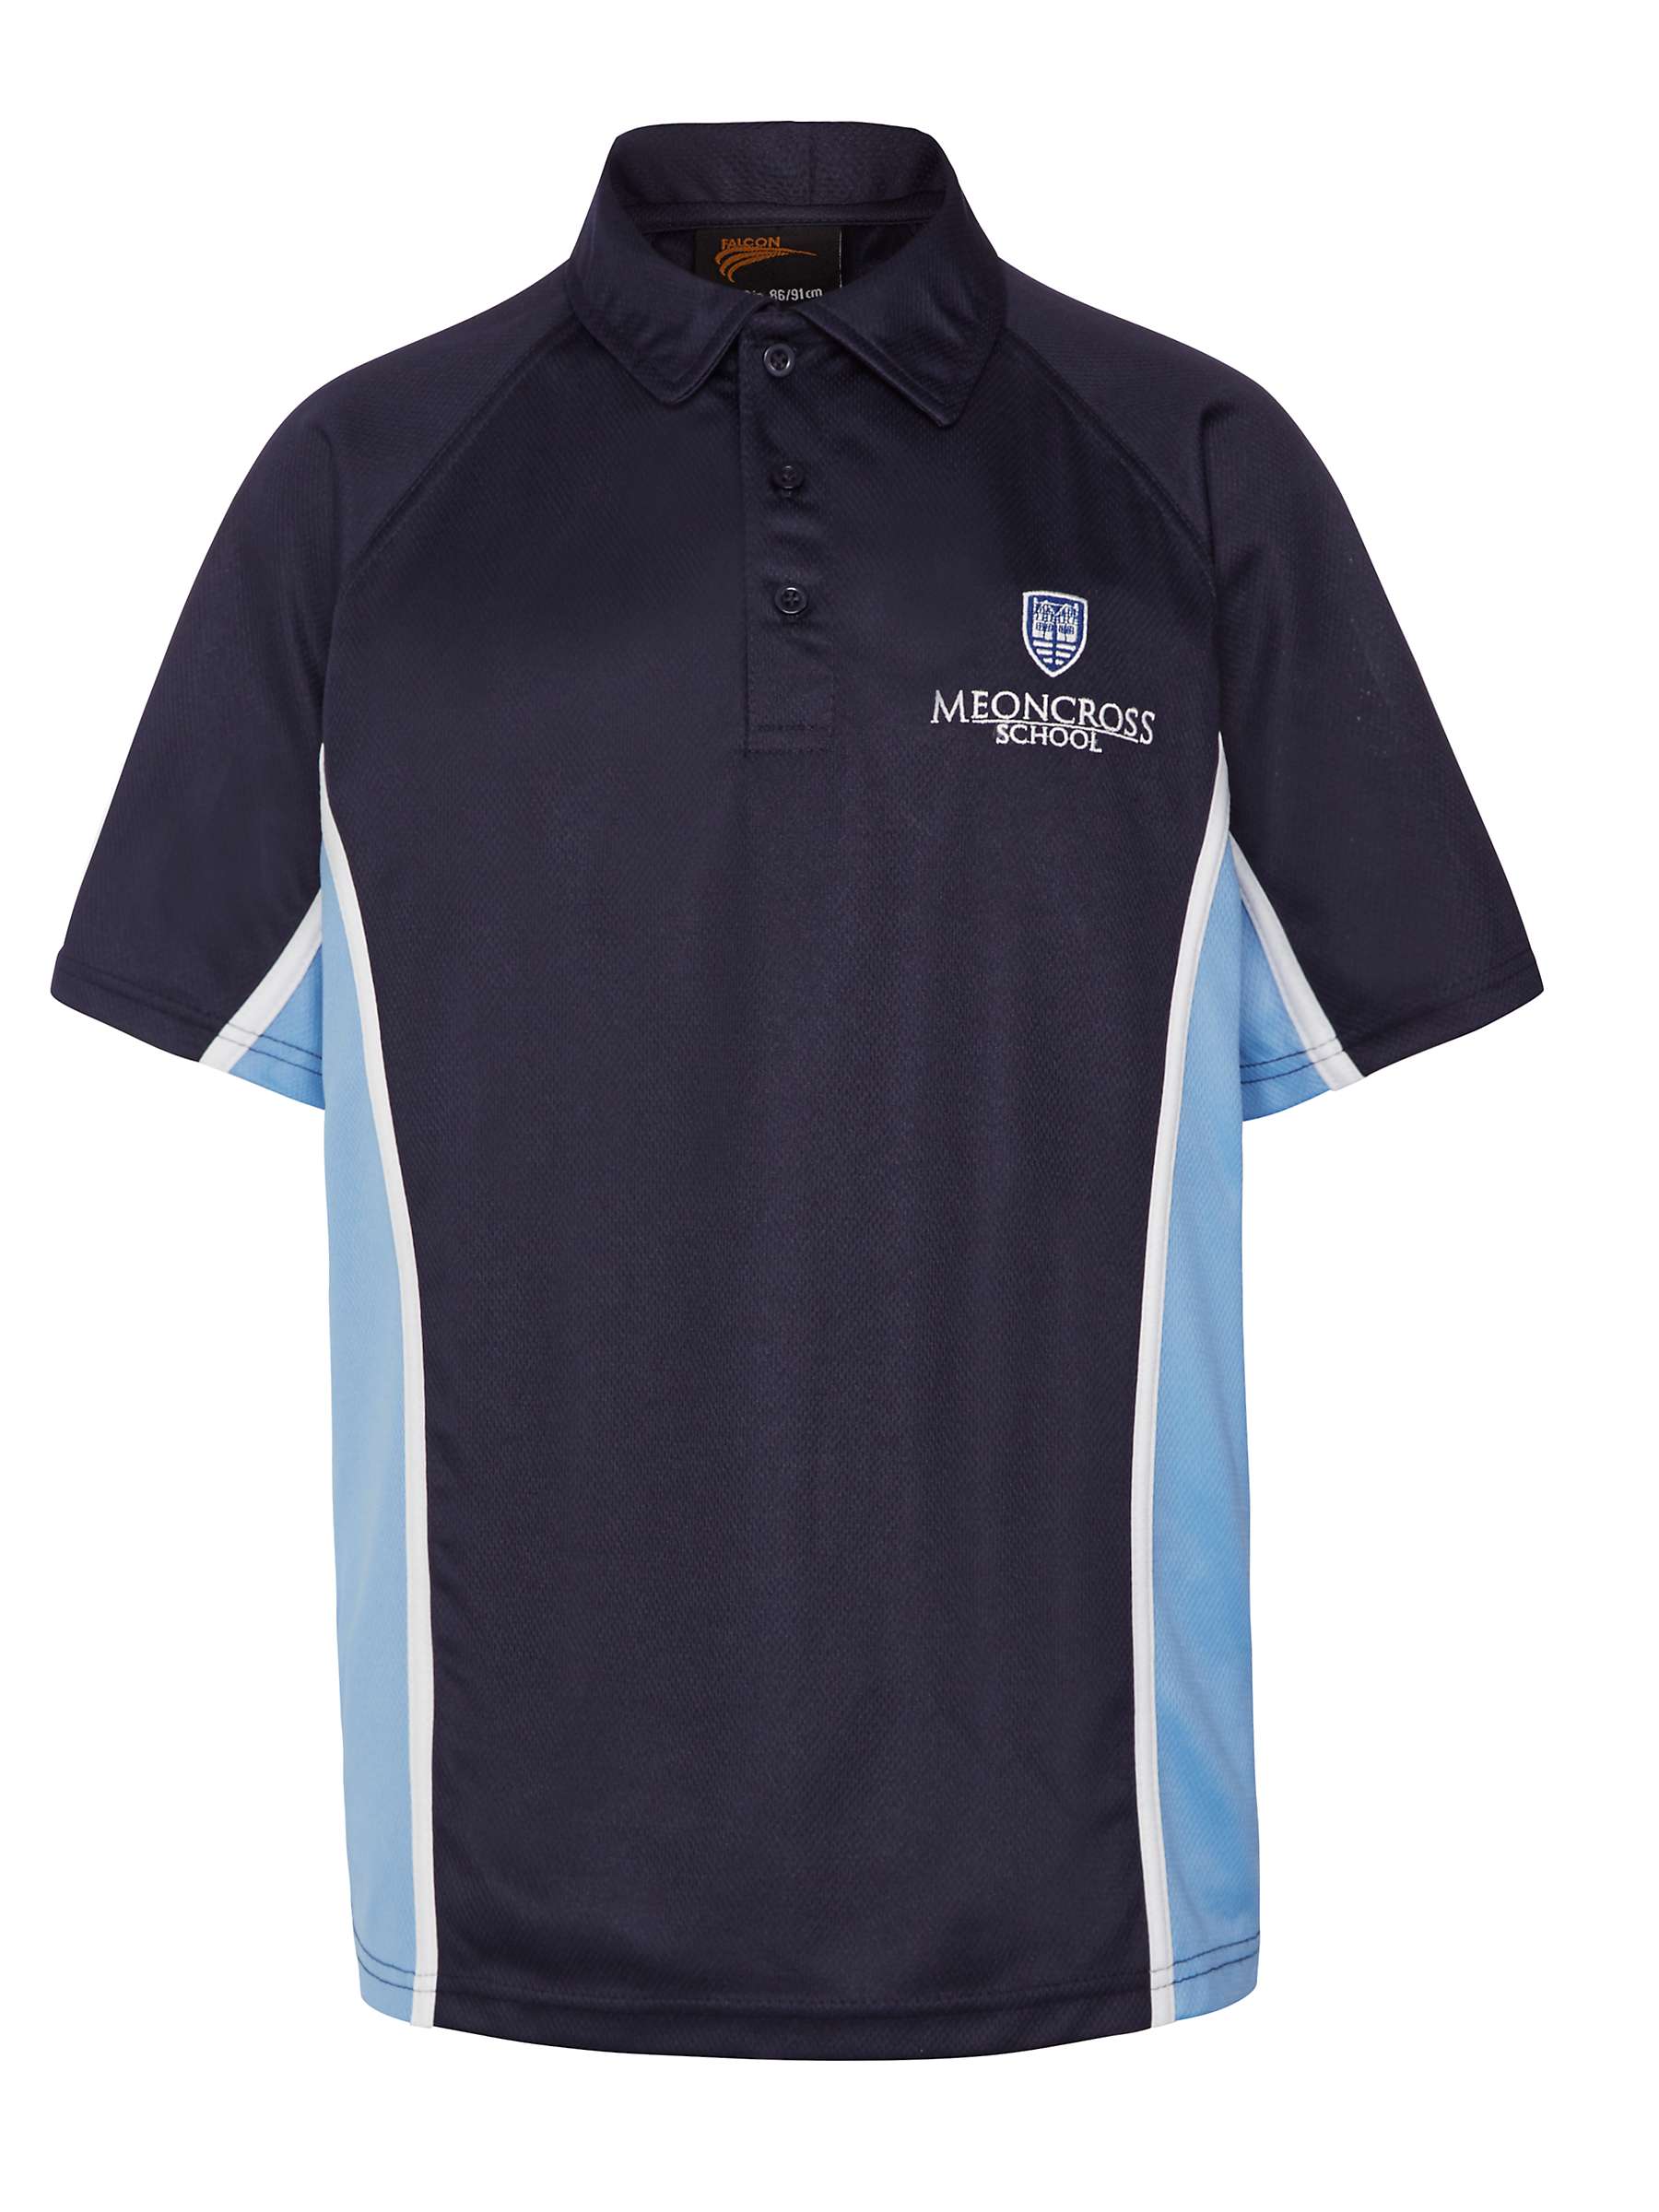 Buy Meoncross School Boys' Sports Polo Shirt, Navy/Sky Blue Online at johnlewis.com